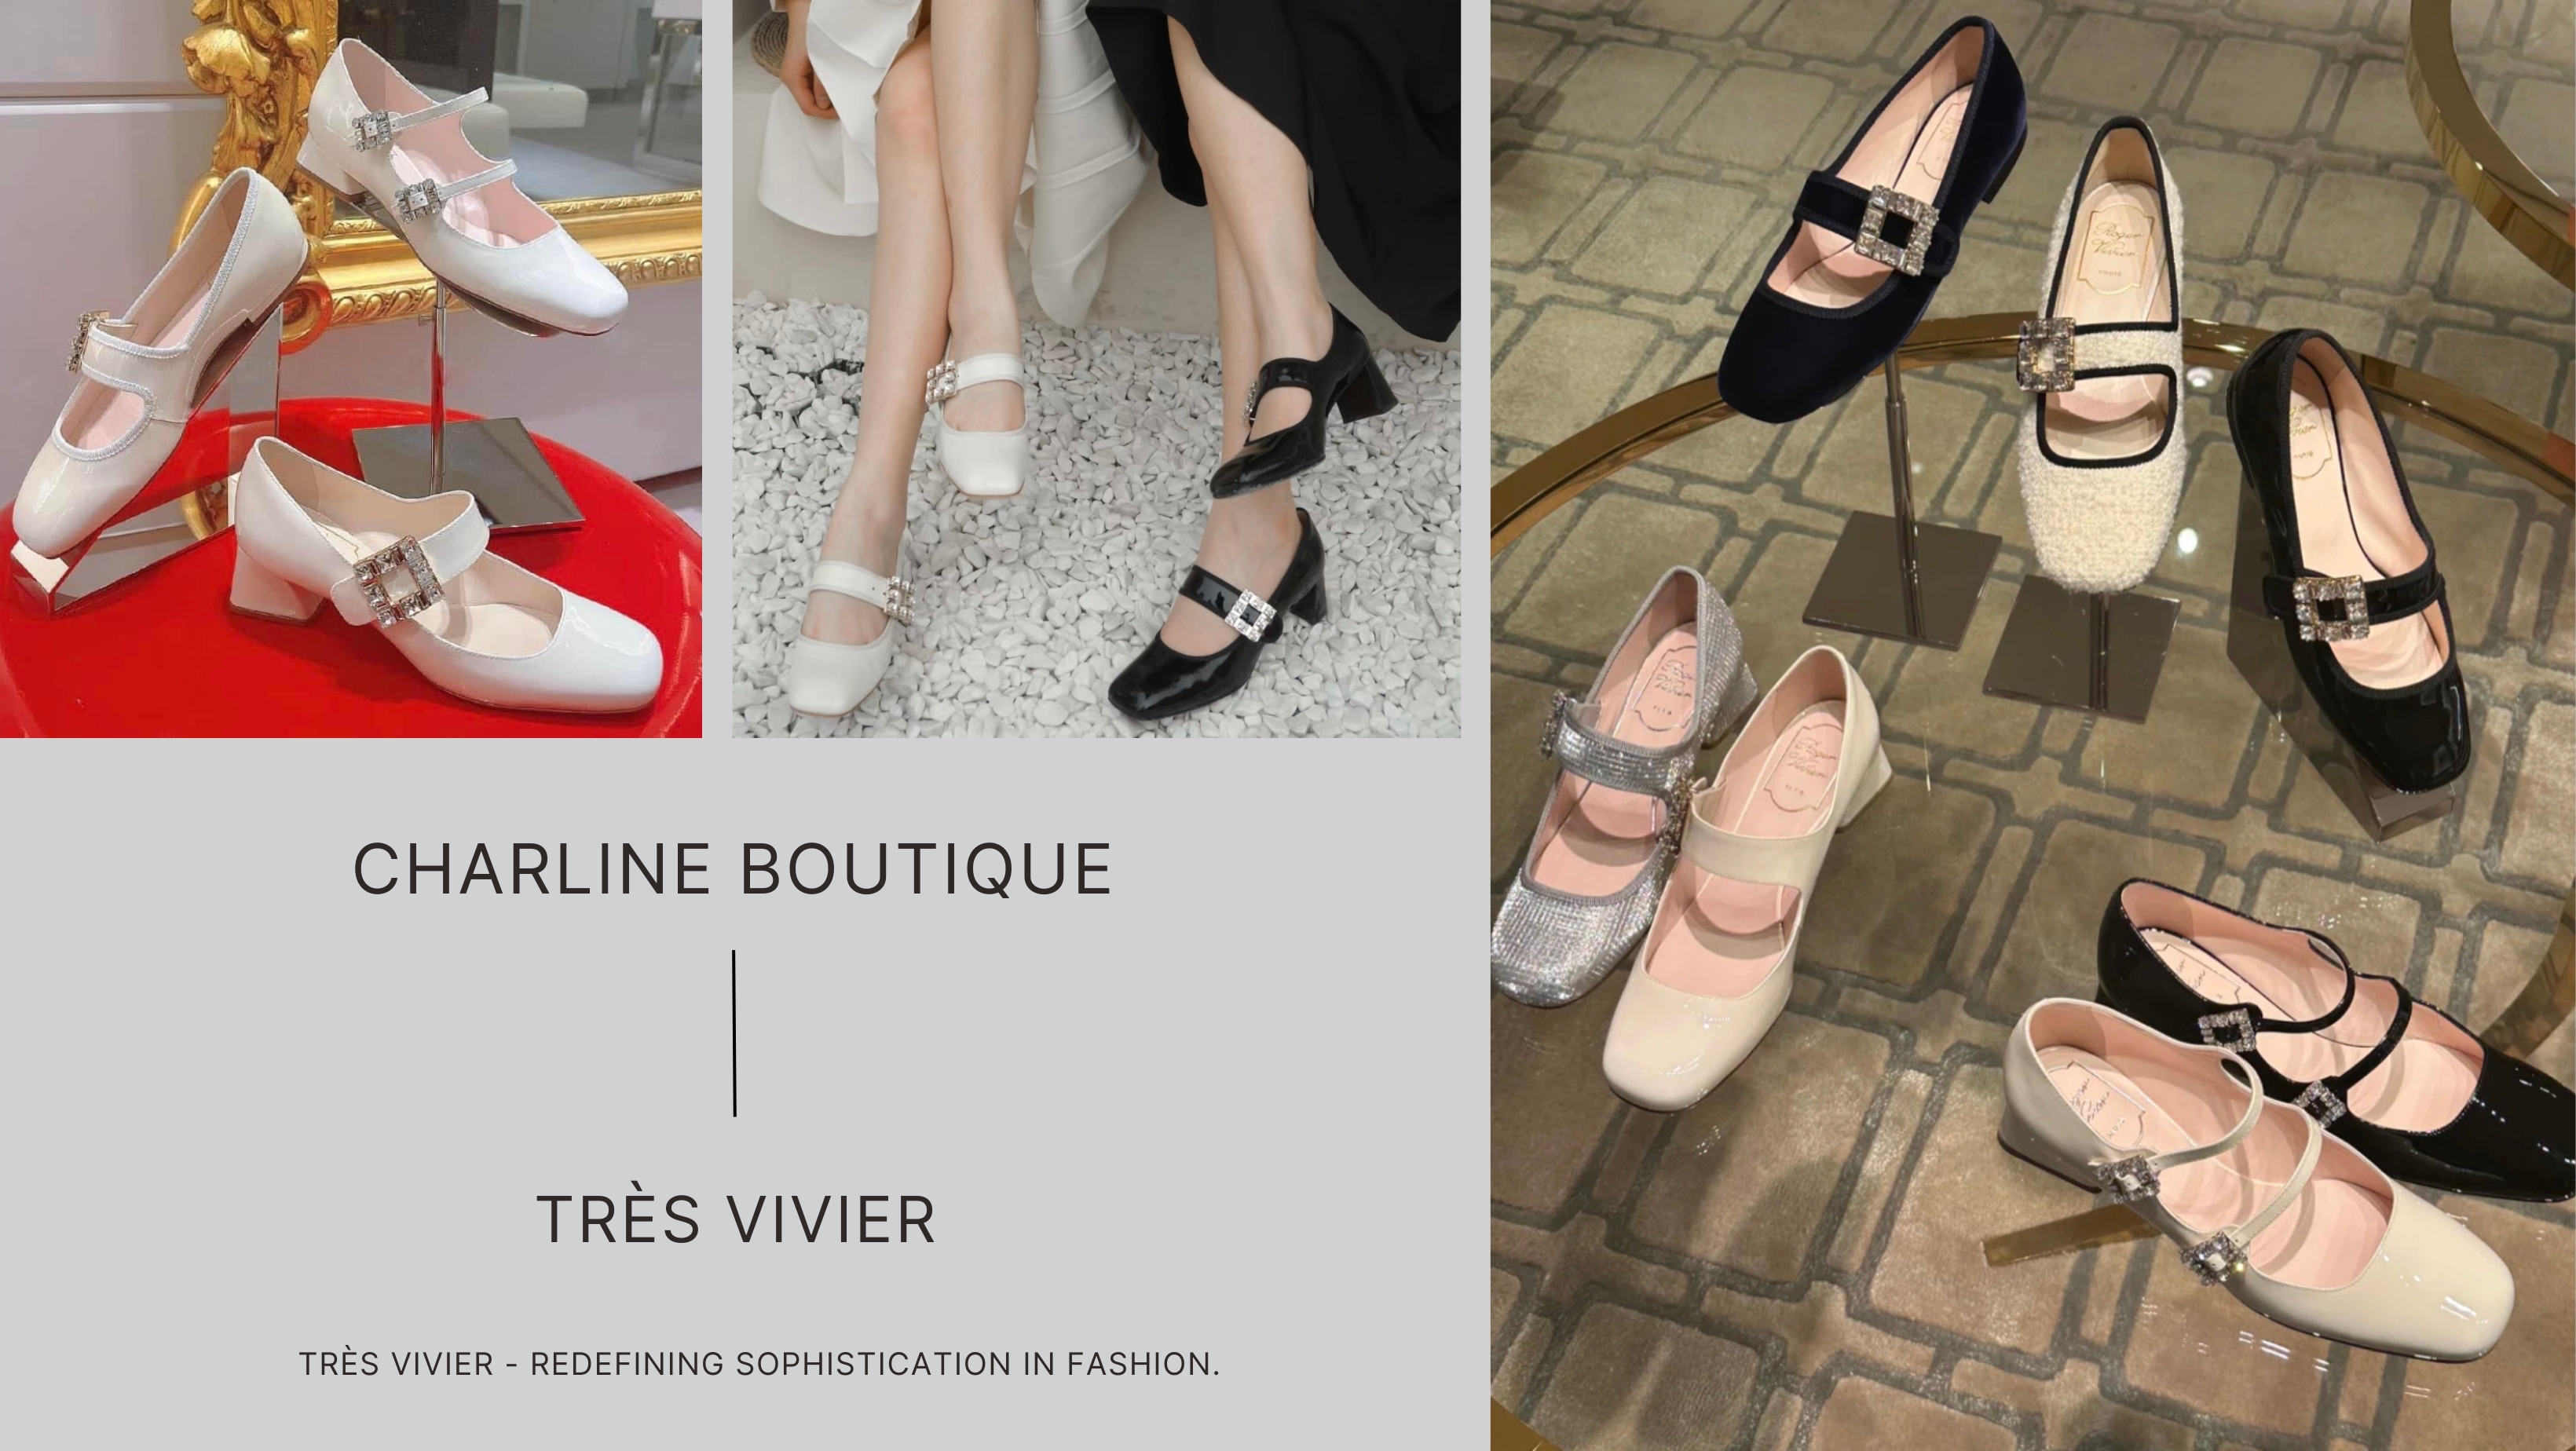 Roger Vivier Très Vivier瑪麗珍鞋成為時尚焦點，融合傳統和現代風格。這些漆皮瑪麗珍鞋設計獨特，有多種高度選擇，0.5cm的平底、2.5cm的粗跟、4.5cm的方跟和7.5cm的粗跟，適應不同場合。小巧的閃鑽扣設計增添迷人光彩，適合宴會、約會和日常穿搭。品牌大使申敏兒展現了瑪麗珍鞋的多樣風格，從優雅到性感，法式風情盡現。這款鞋子已經不再是老派，而是時尚的代表，同時提供出色的舒適性，特別對於寬腳型。Très Vivier瑪麗珍鞋就是首選。